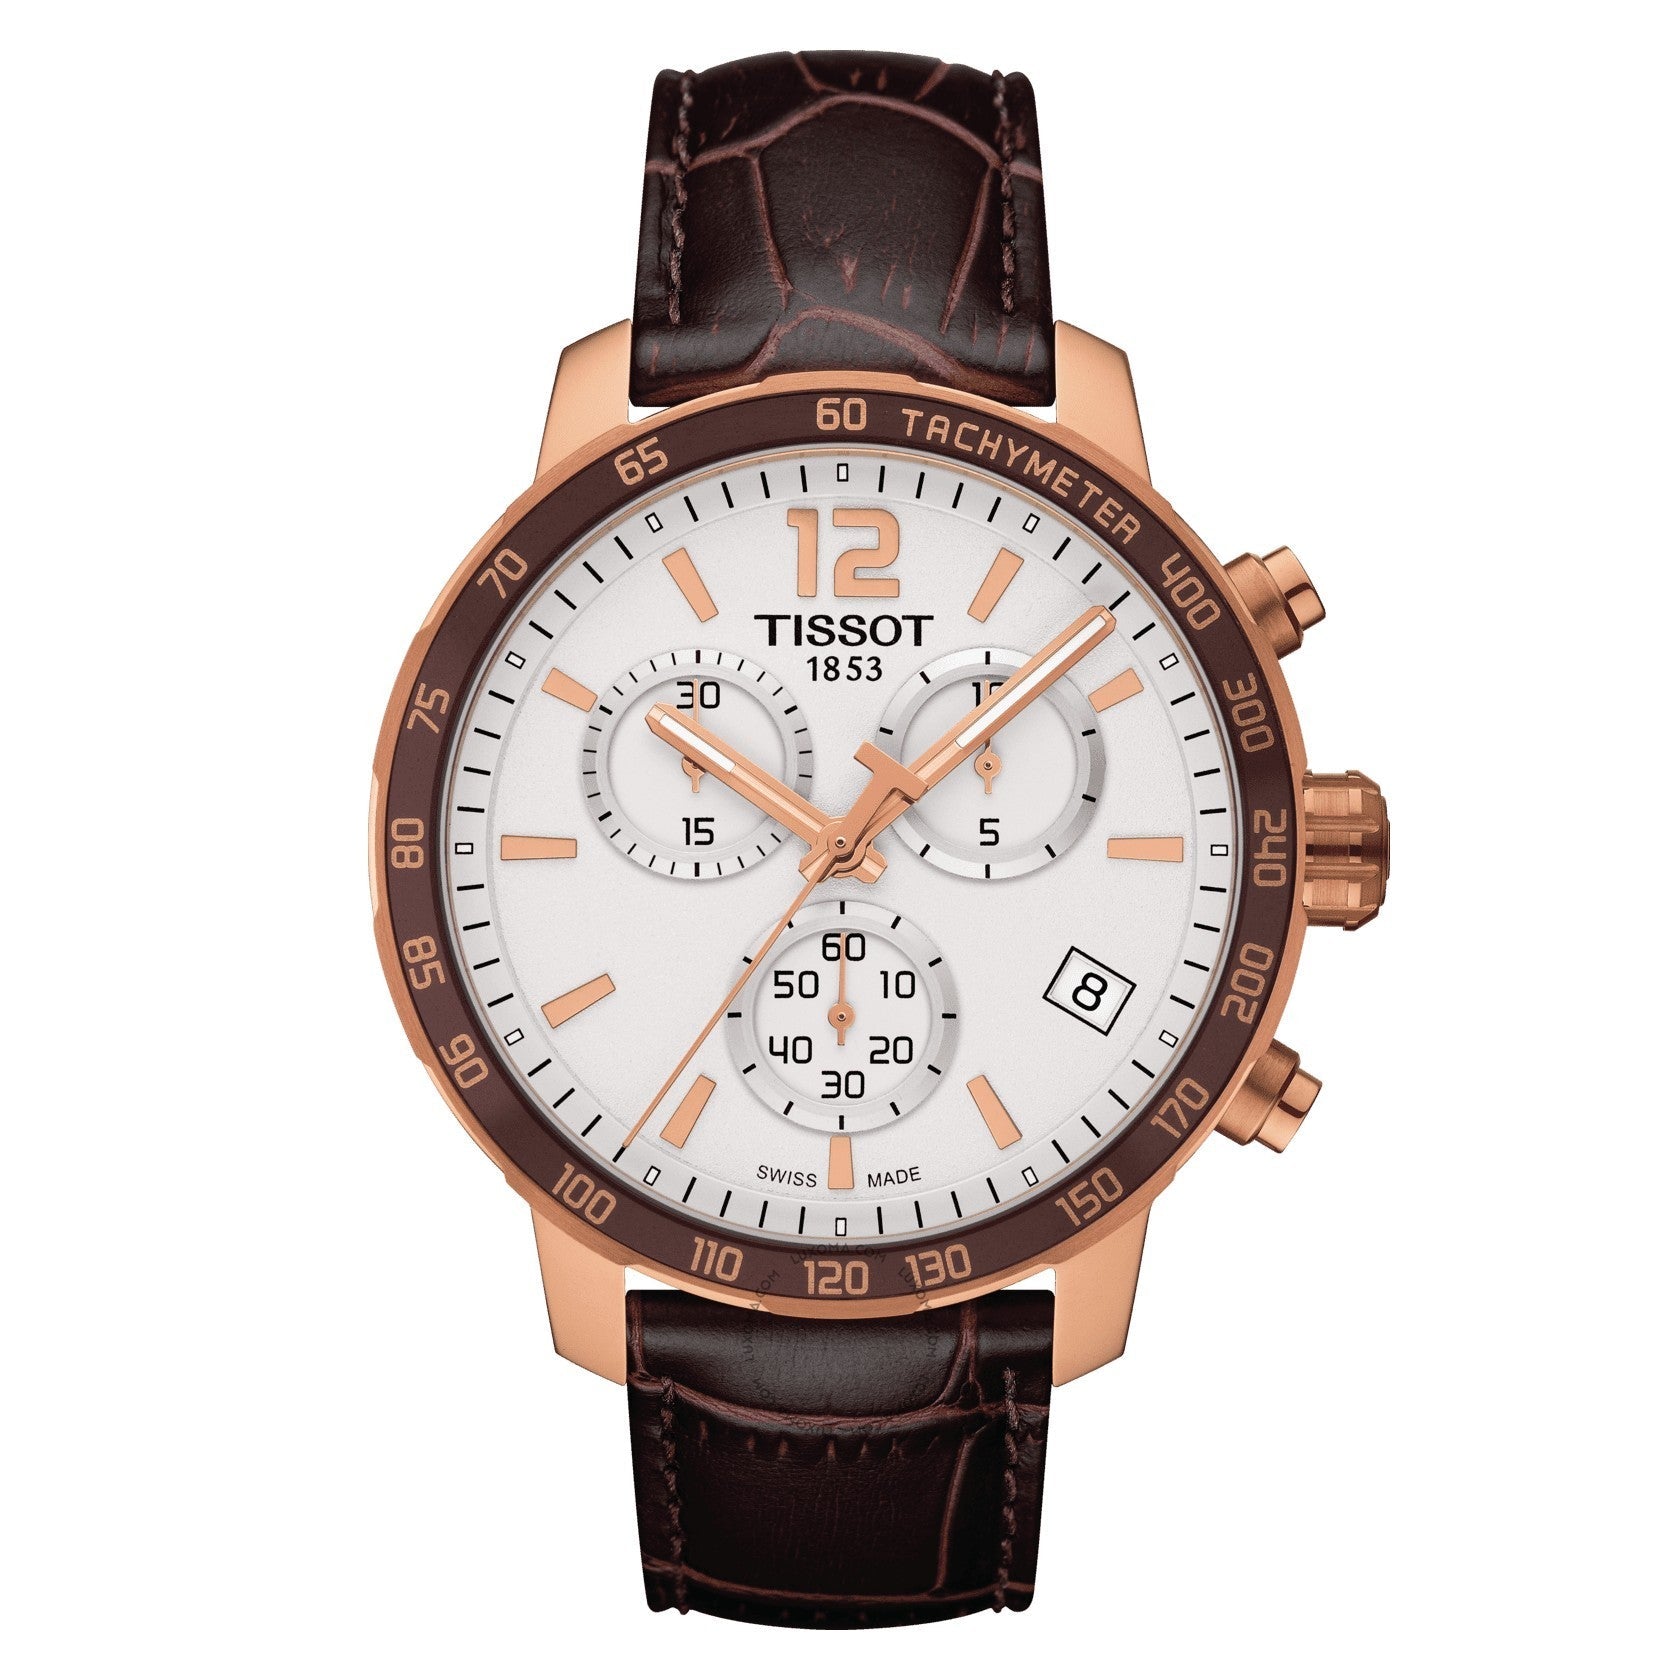 Tissot Quickster Chronograph White Dial Men's Watch T095.417.36.037.00